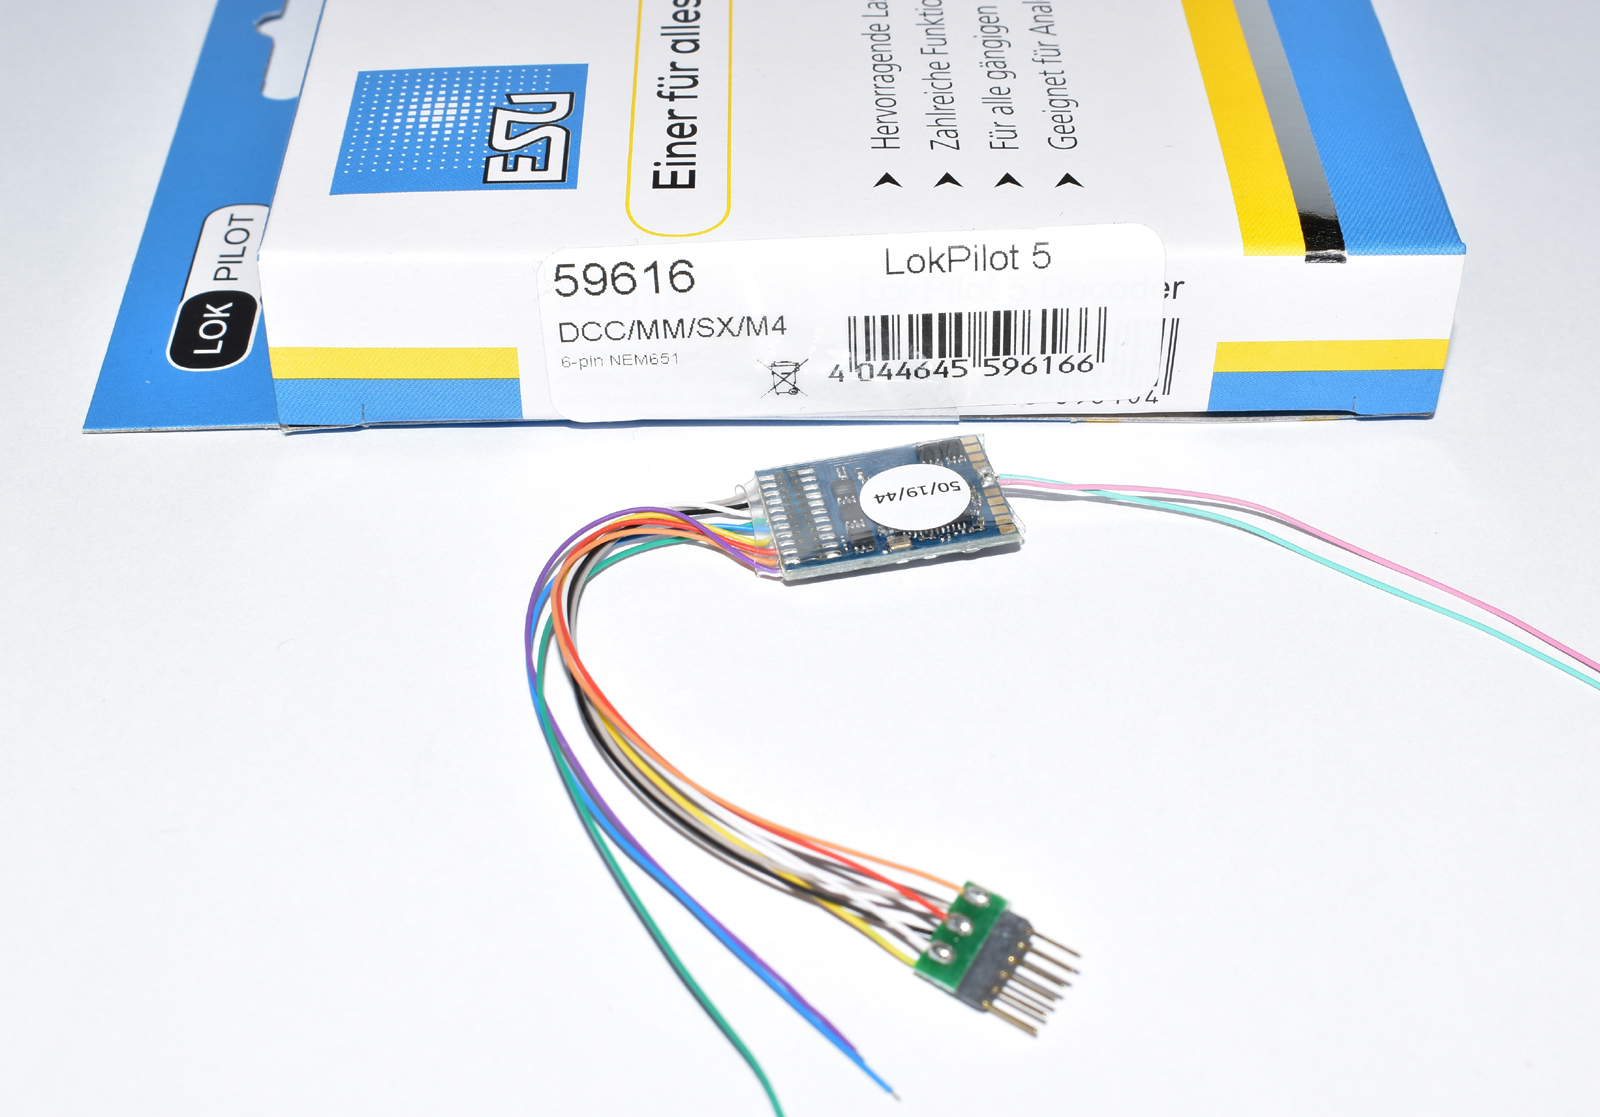 Artikel Bild: ESU 59616 LokPilot 5.0 DCC/MM/SX/M4, 6-pin NEM651 Decoder